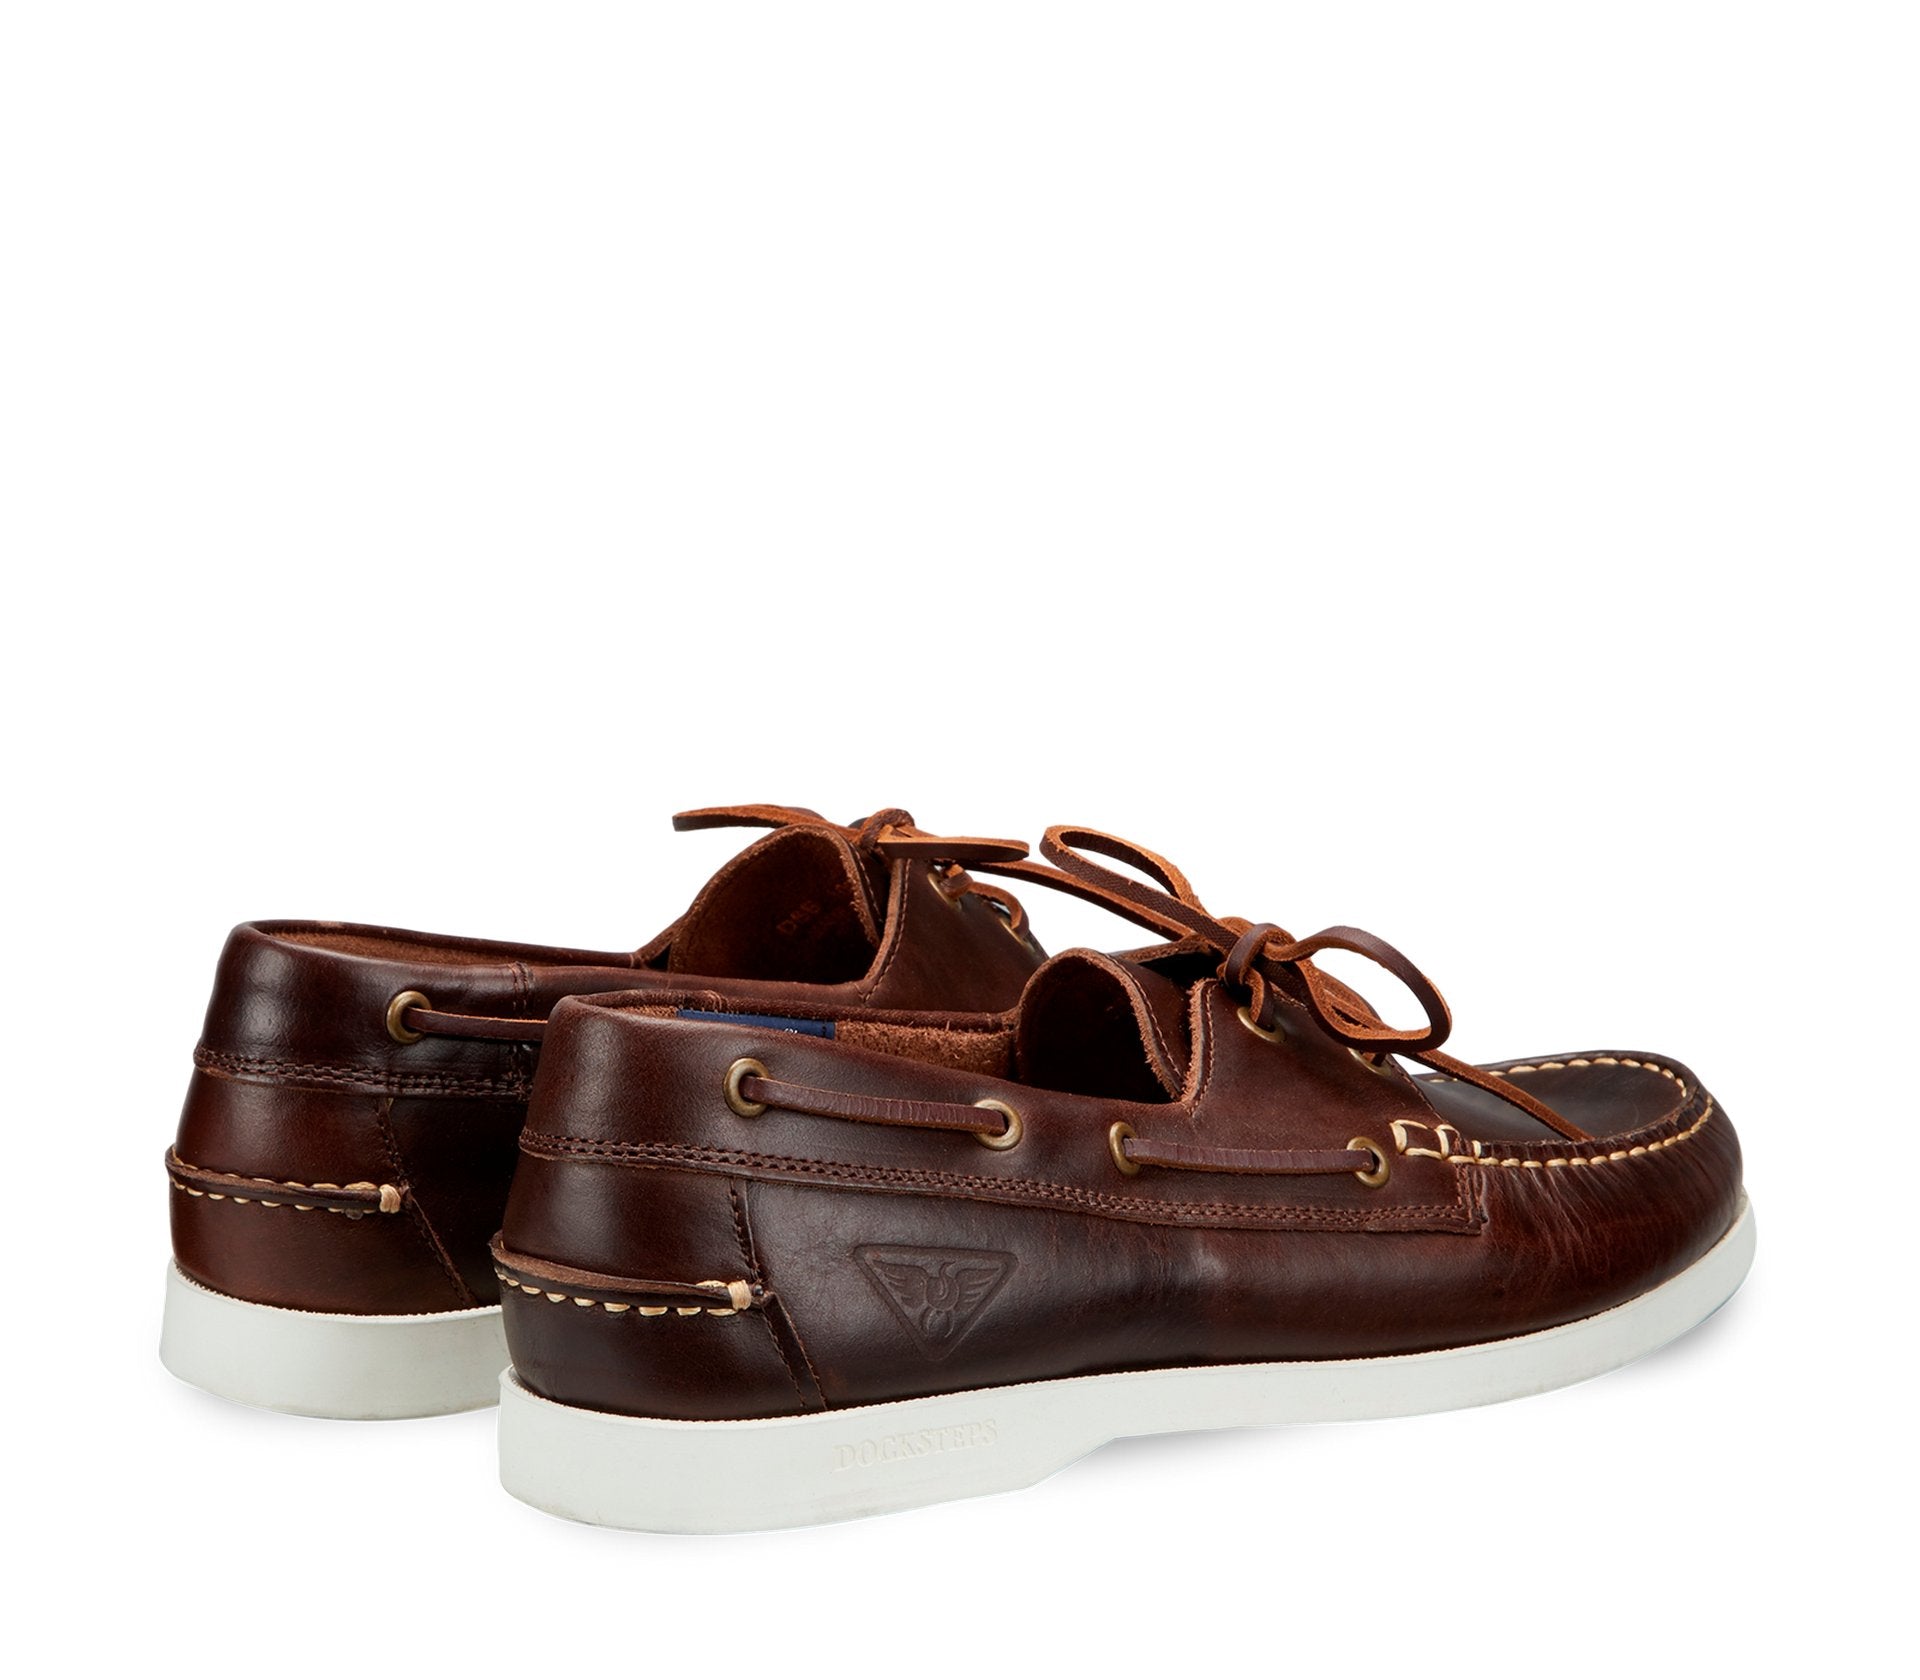 Beige Leather Men's Boat Shoes